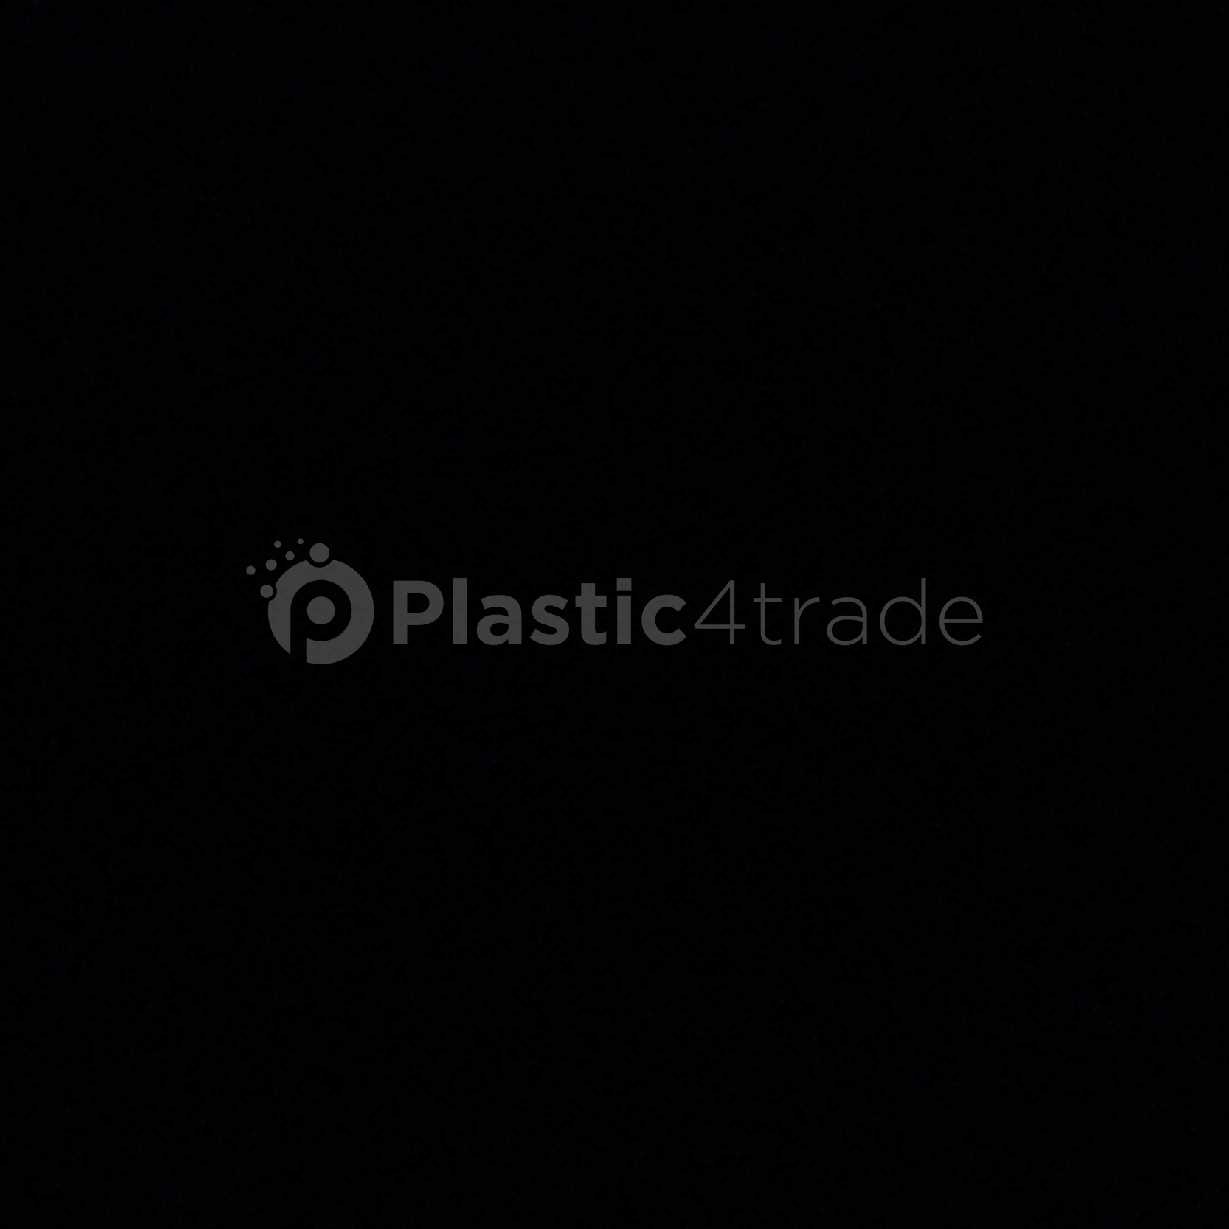 ALL PLASTIC Plastic Waste Scrap Mix Scrap tamil nadu india Plastic4trade